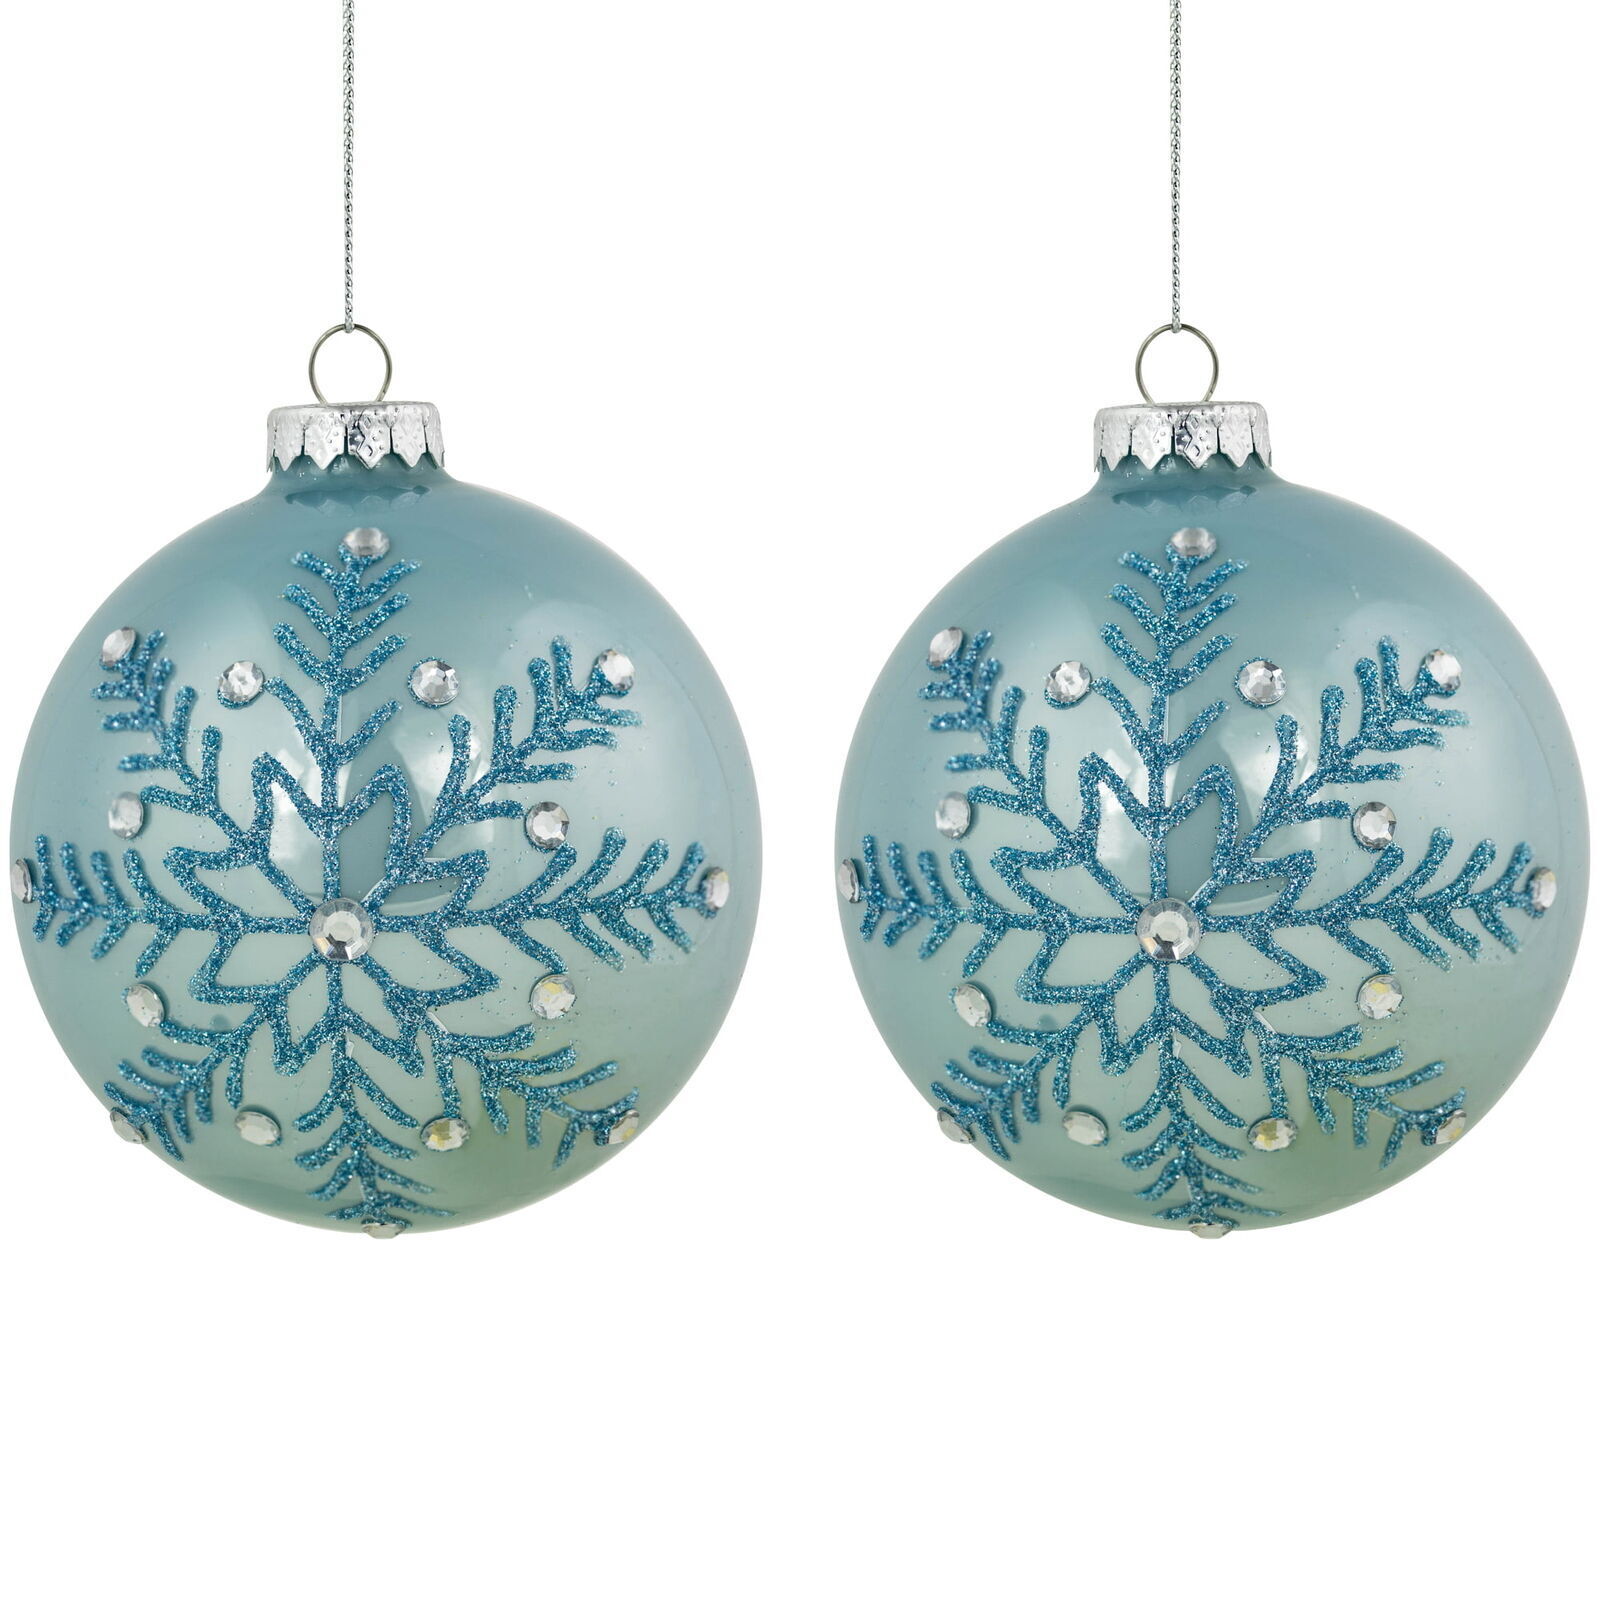 Set of 2 Light Blue Glittered and Jeweled Snowflake Glass Christmas Ball